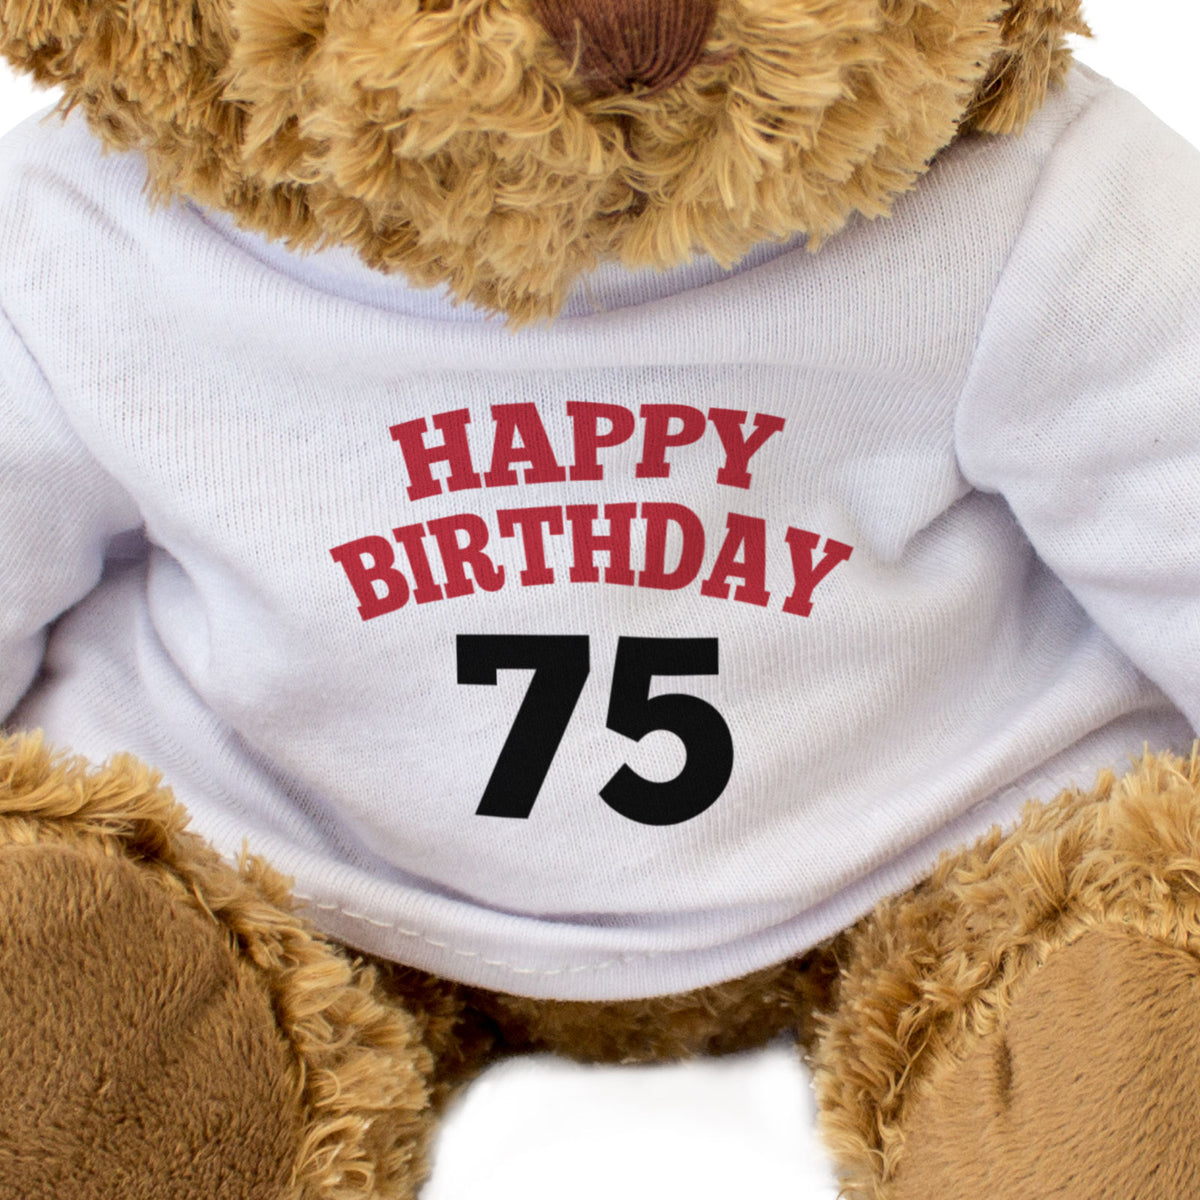 Happy Birthday 75 - Teddy Bear